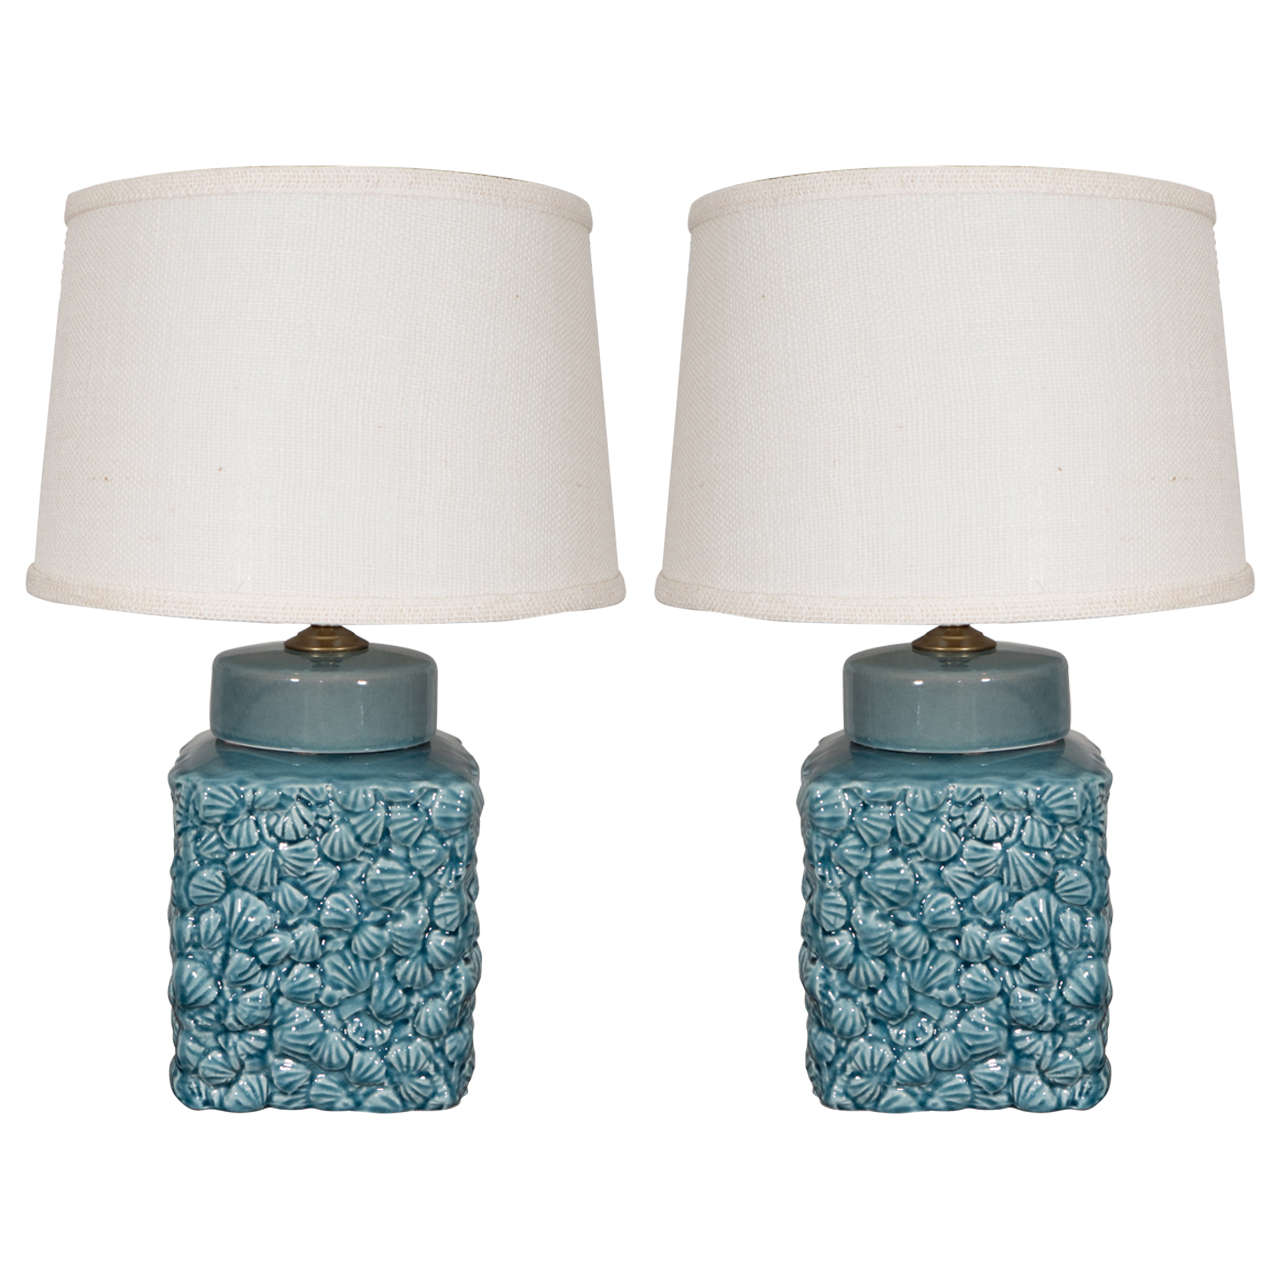 Pair of Ceramic Shell Lamps